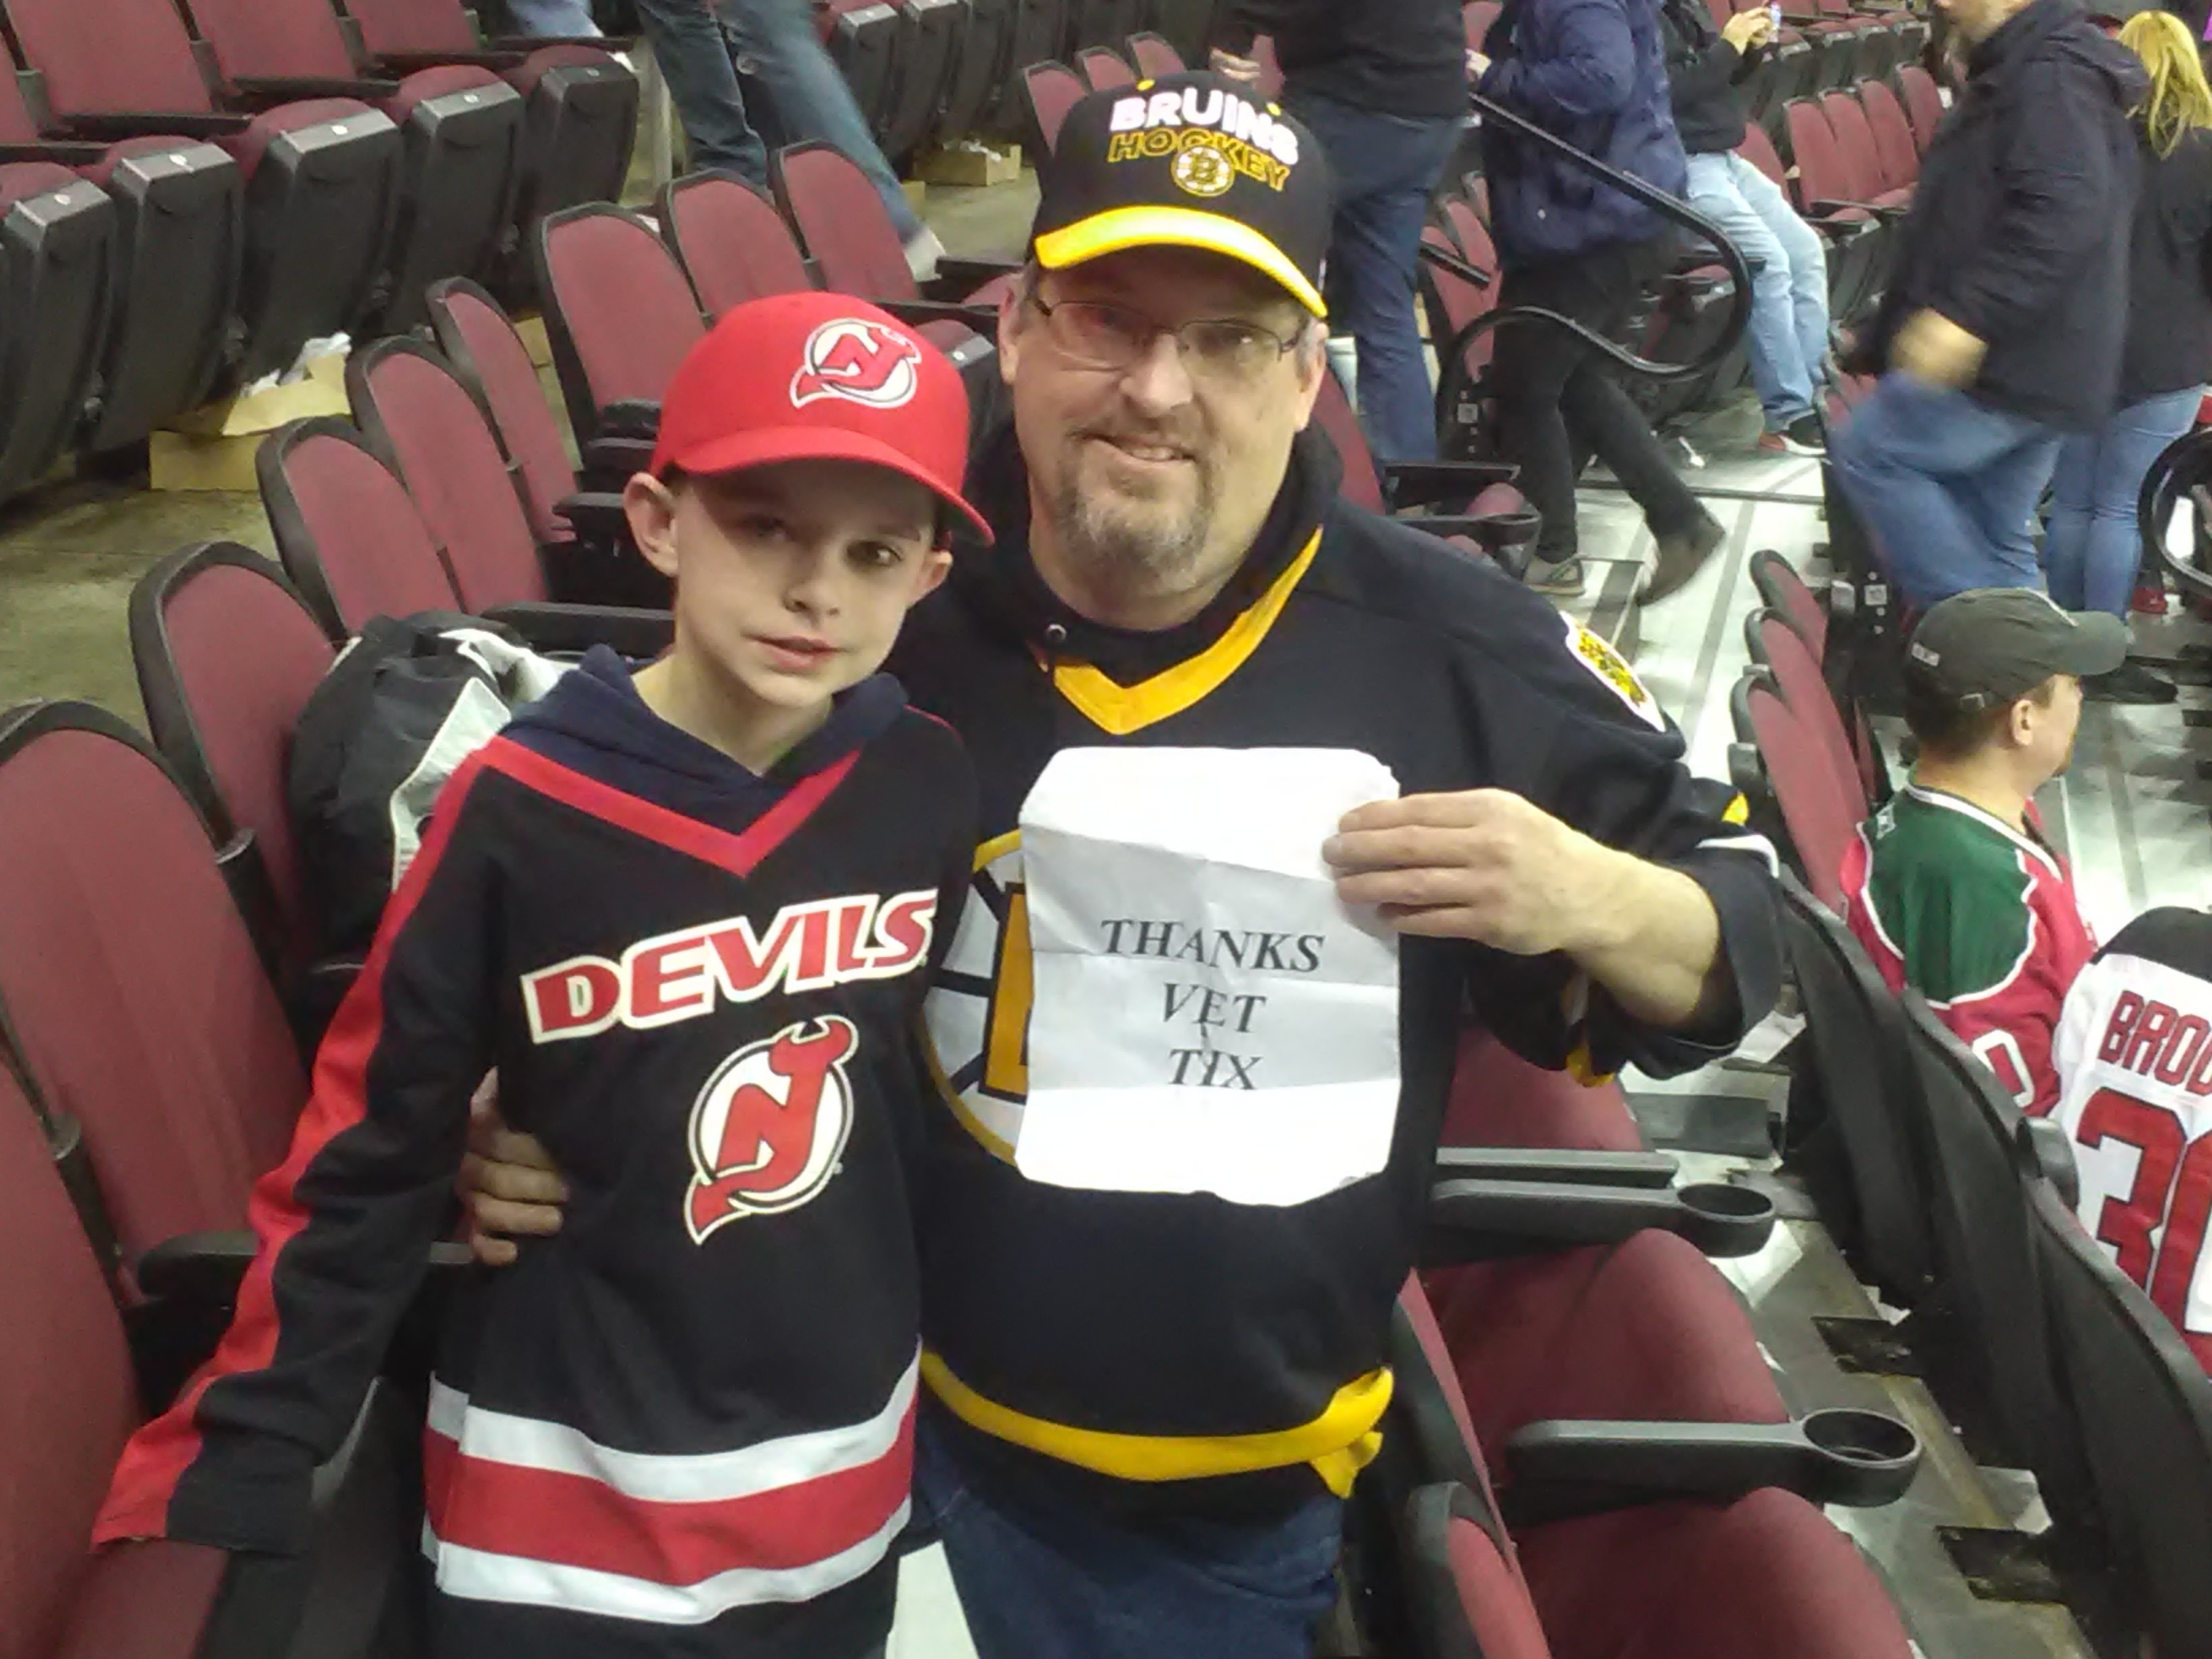 boston bruins new jersey devils tickets